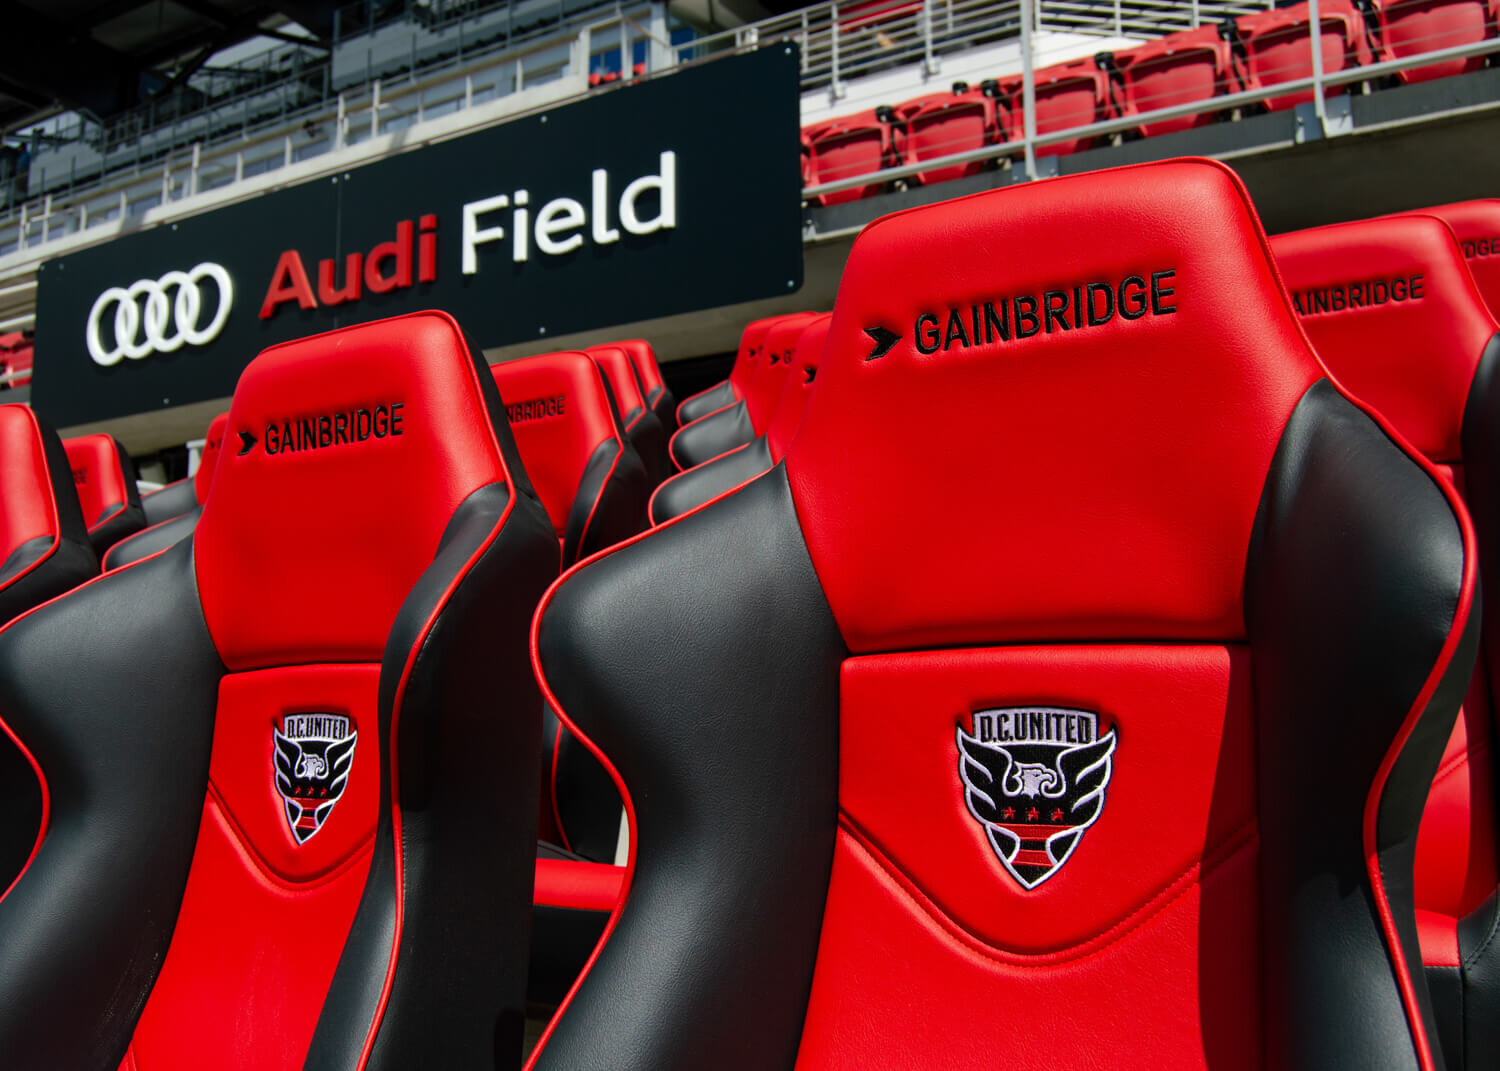 Audi-Field-Gainbridge-Washington-DC-United-MLS-Soccer-Stadium-crvnka-Photography-5.JPG